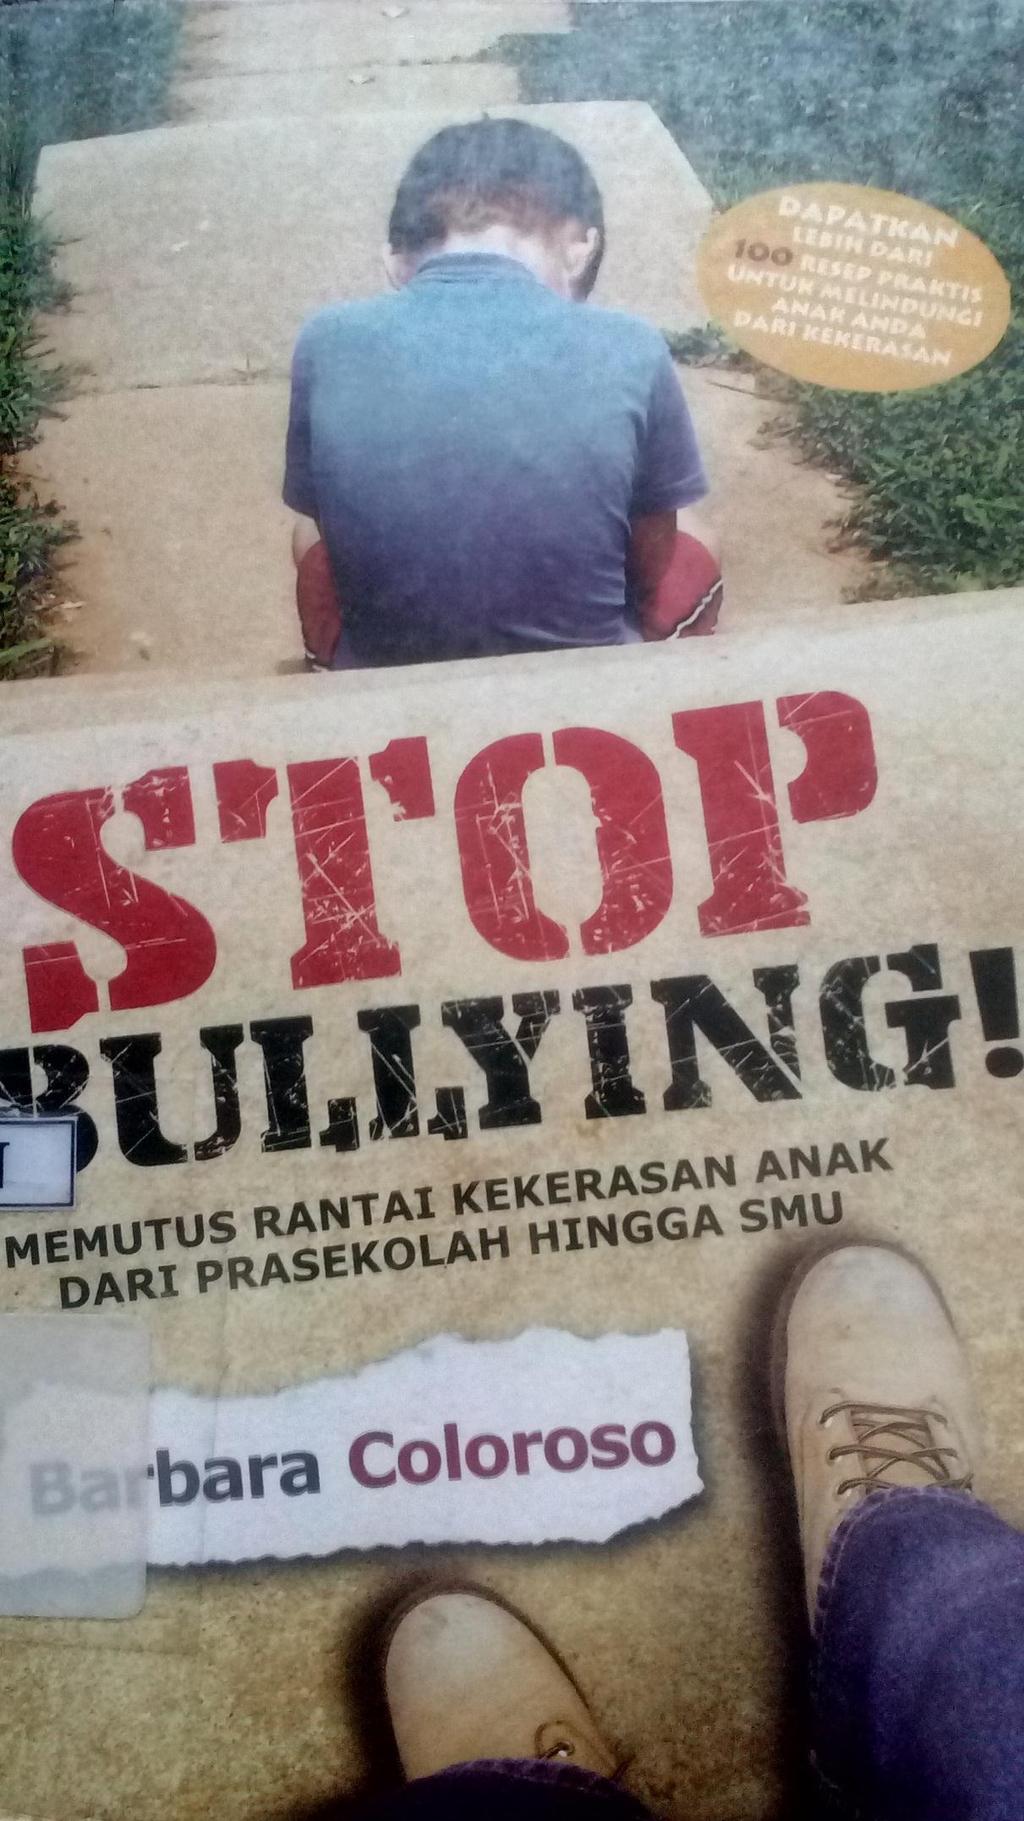 Daftar Buku untuk Topik Anti-Bullying